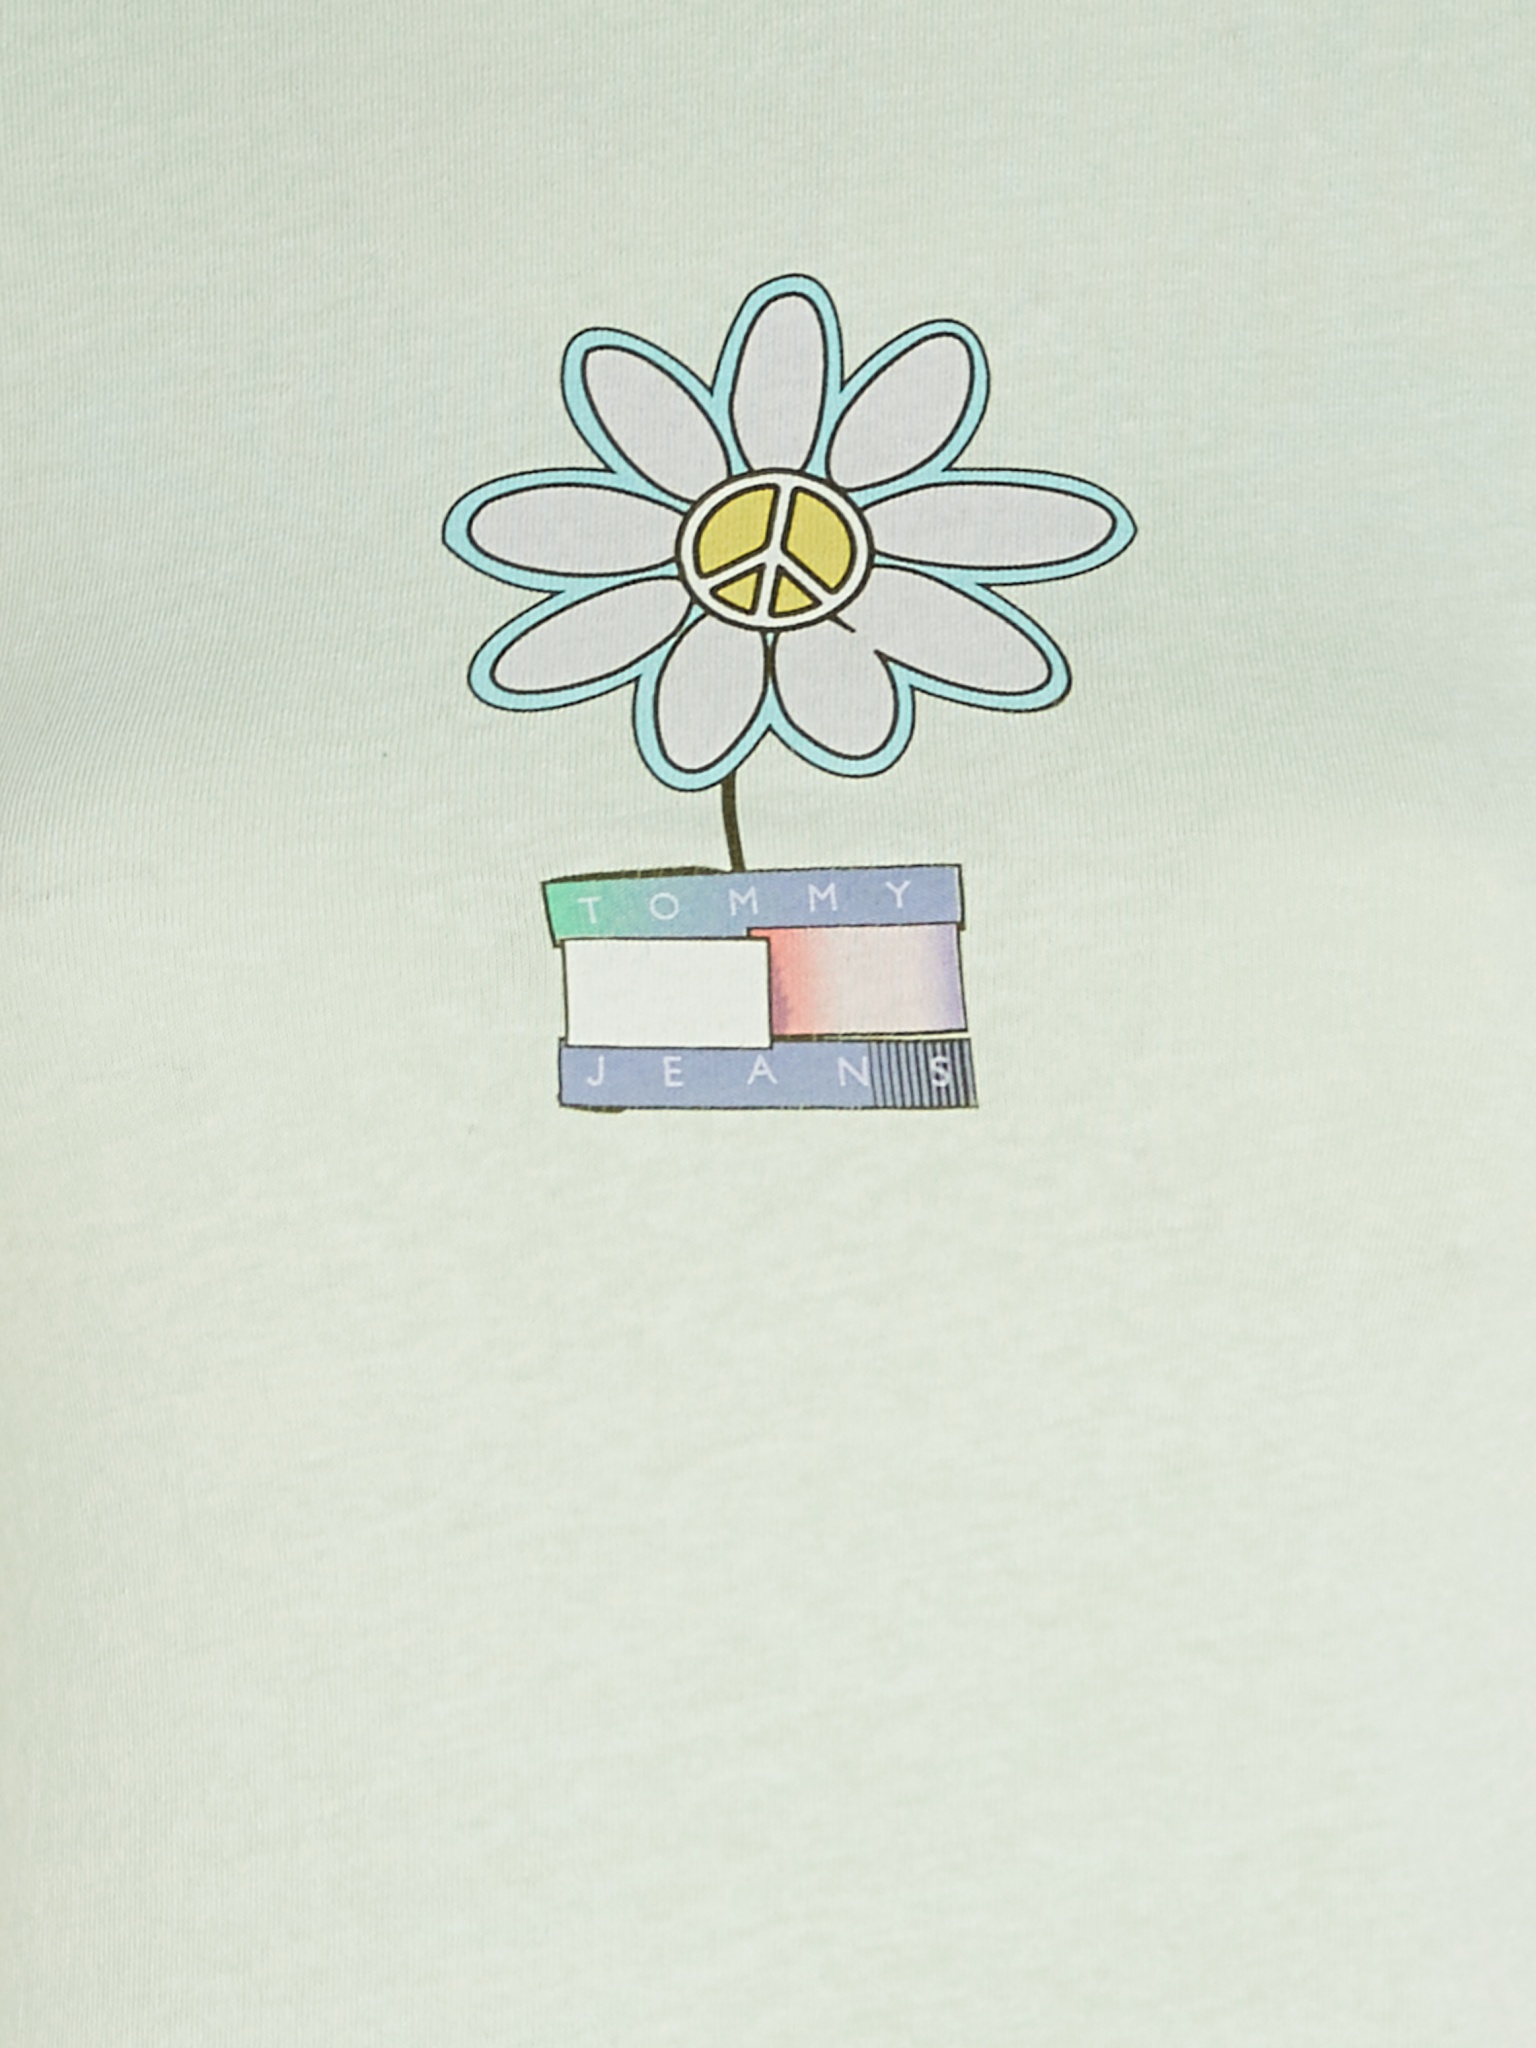 TOMMY JEANS T-Shirt mit Flower Logo 10735103